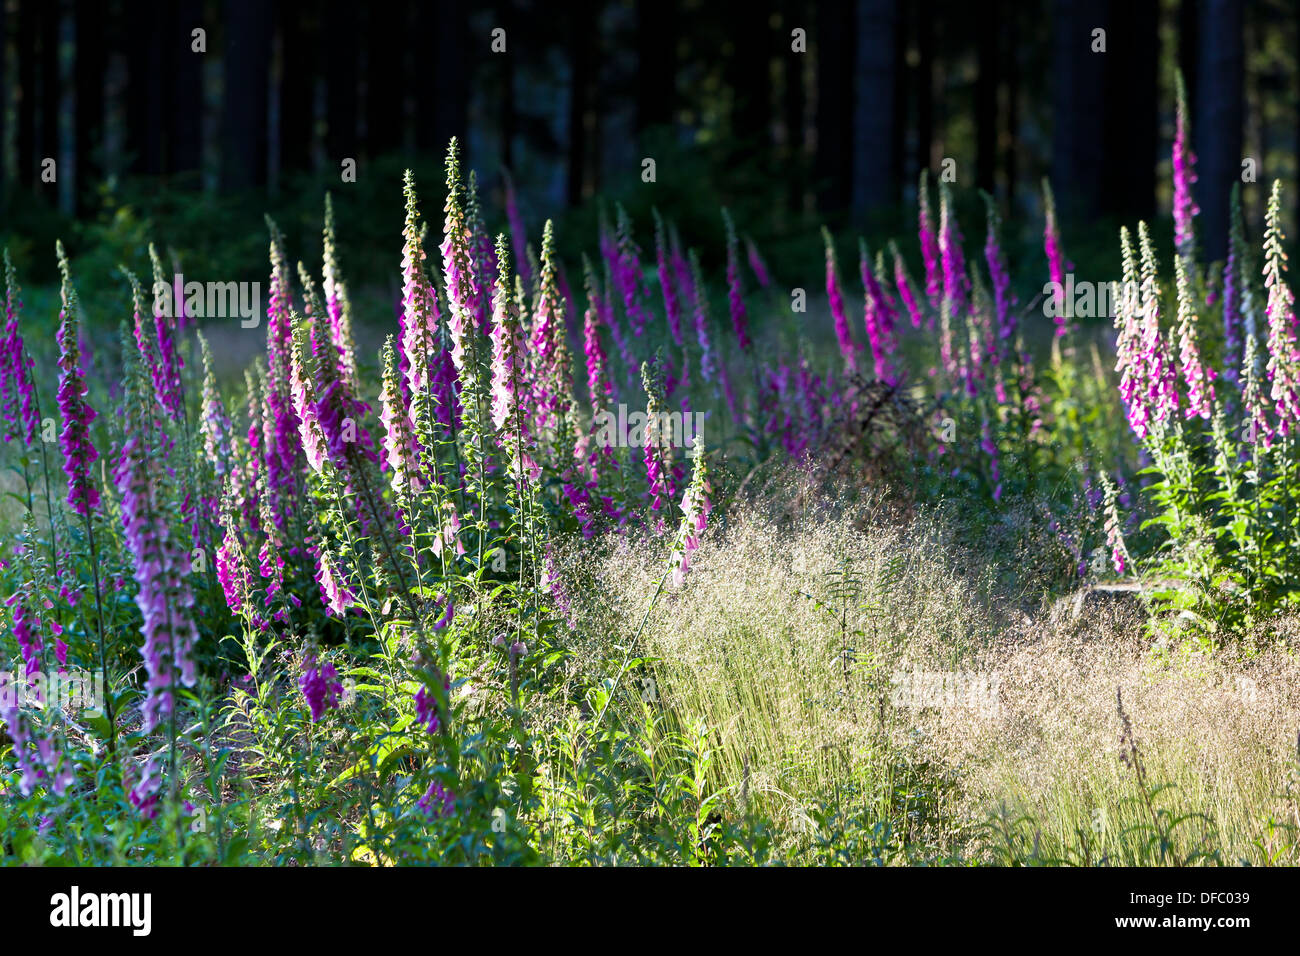 Germany, Bavaria, Foxglove flower in grass Stock Photo